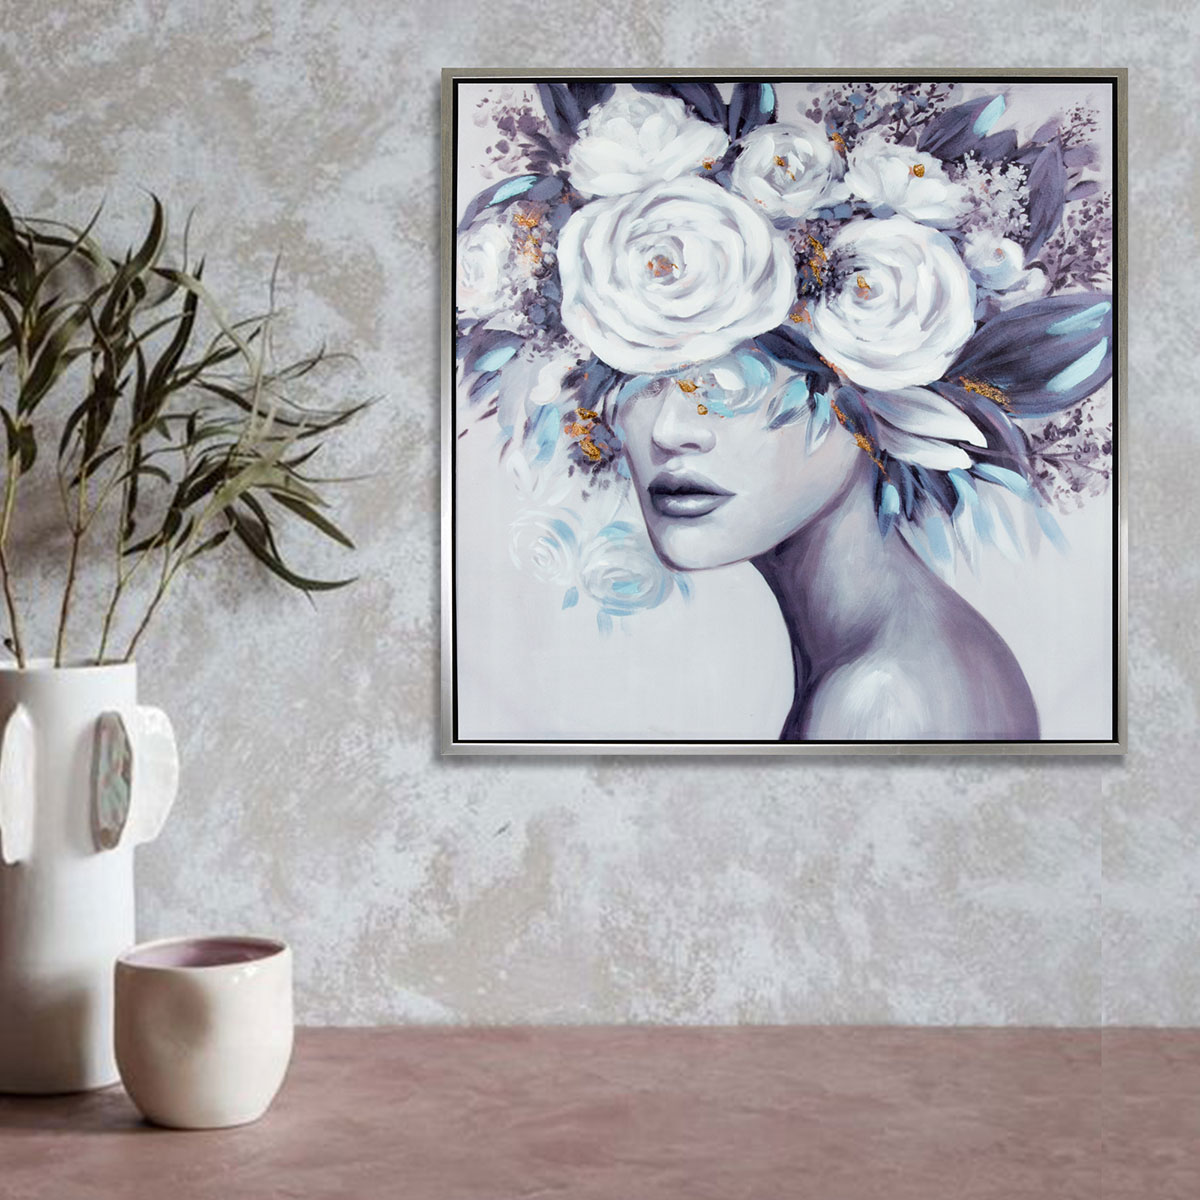 34929-cuadro-mujer-floral-82-x-82-cm-1.jpg